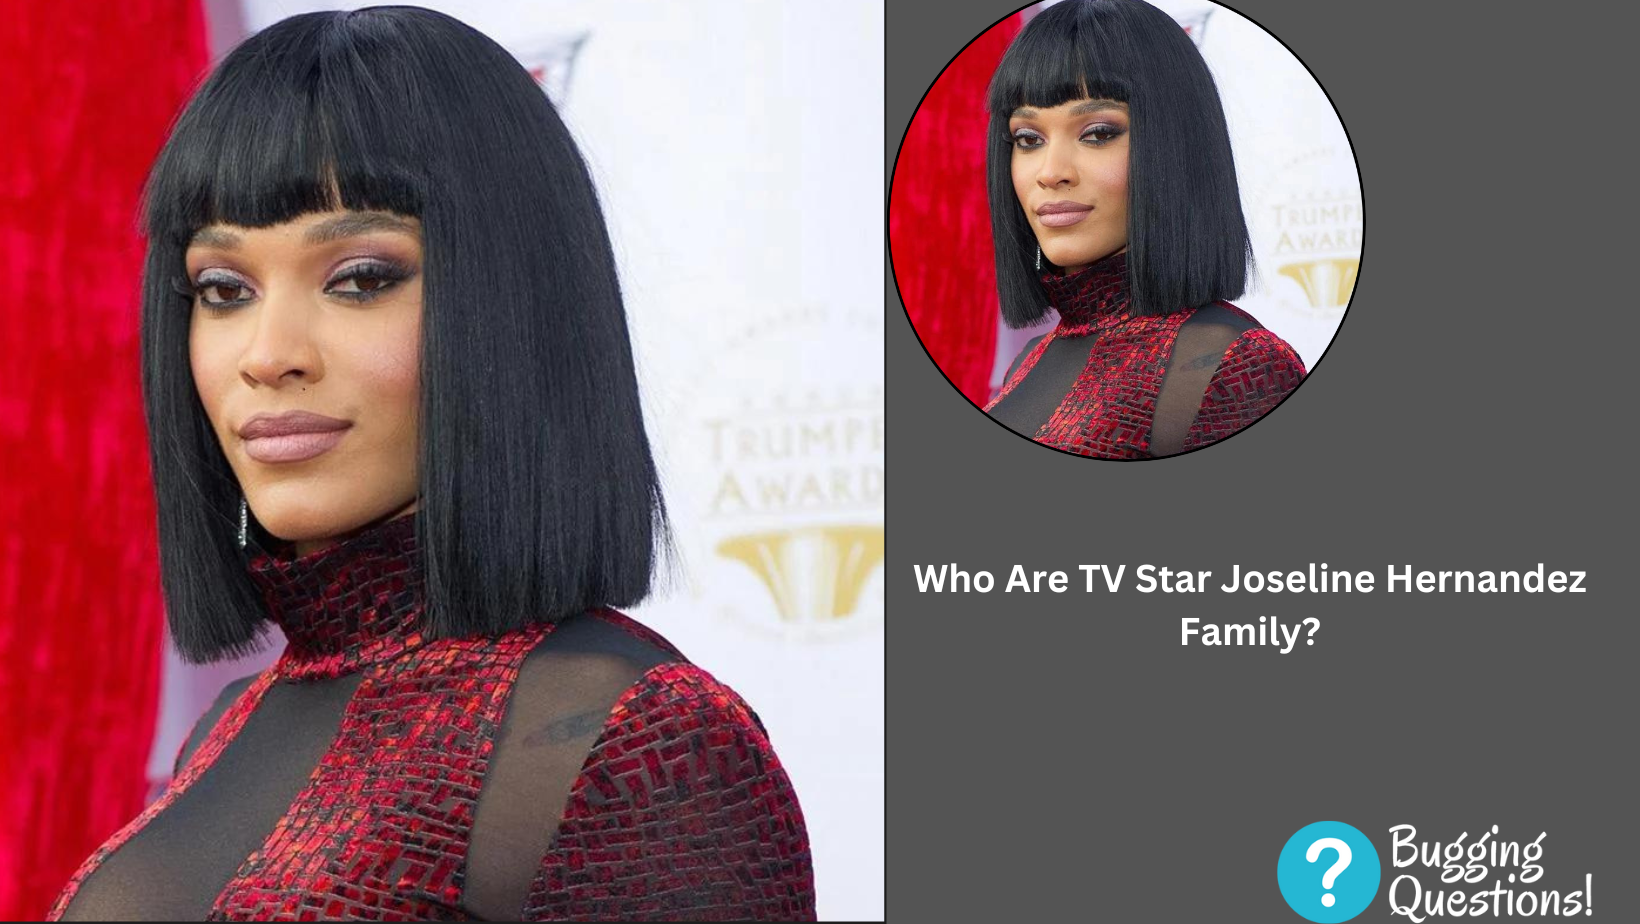 Who Are TV Star Joseline Hernandez Family?